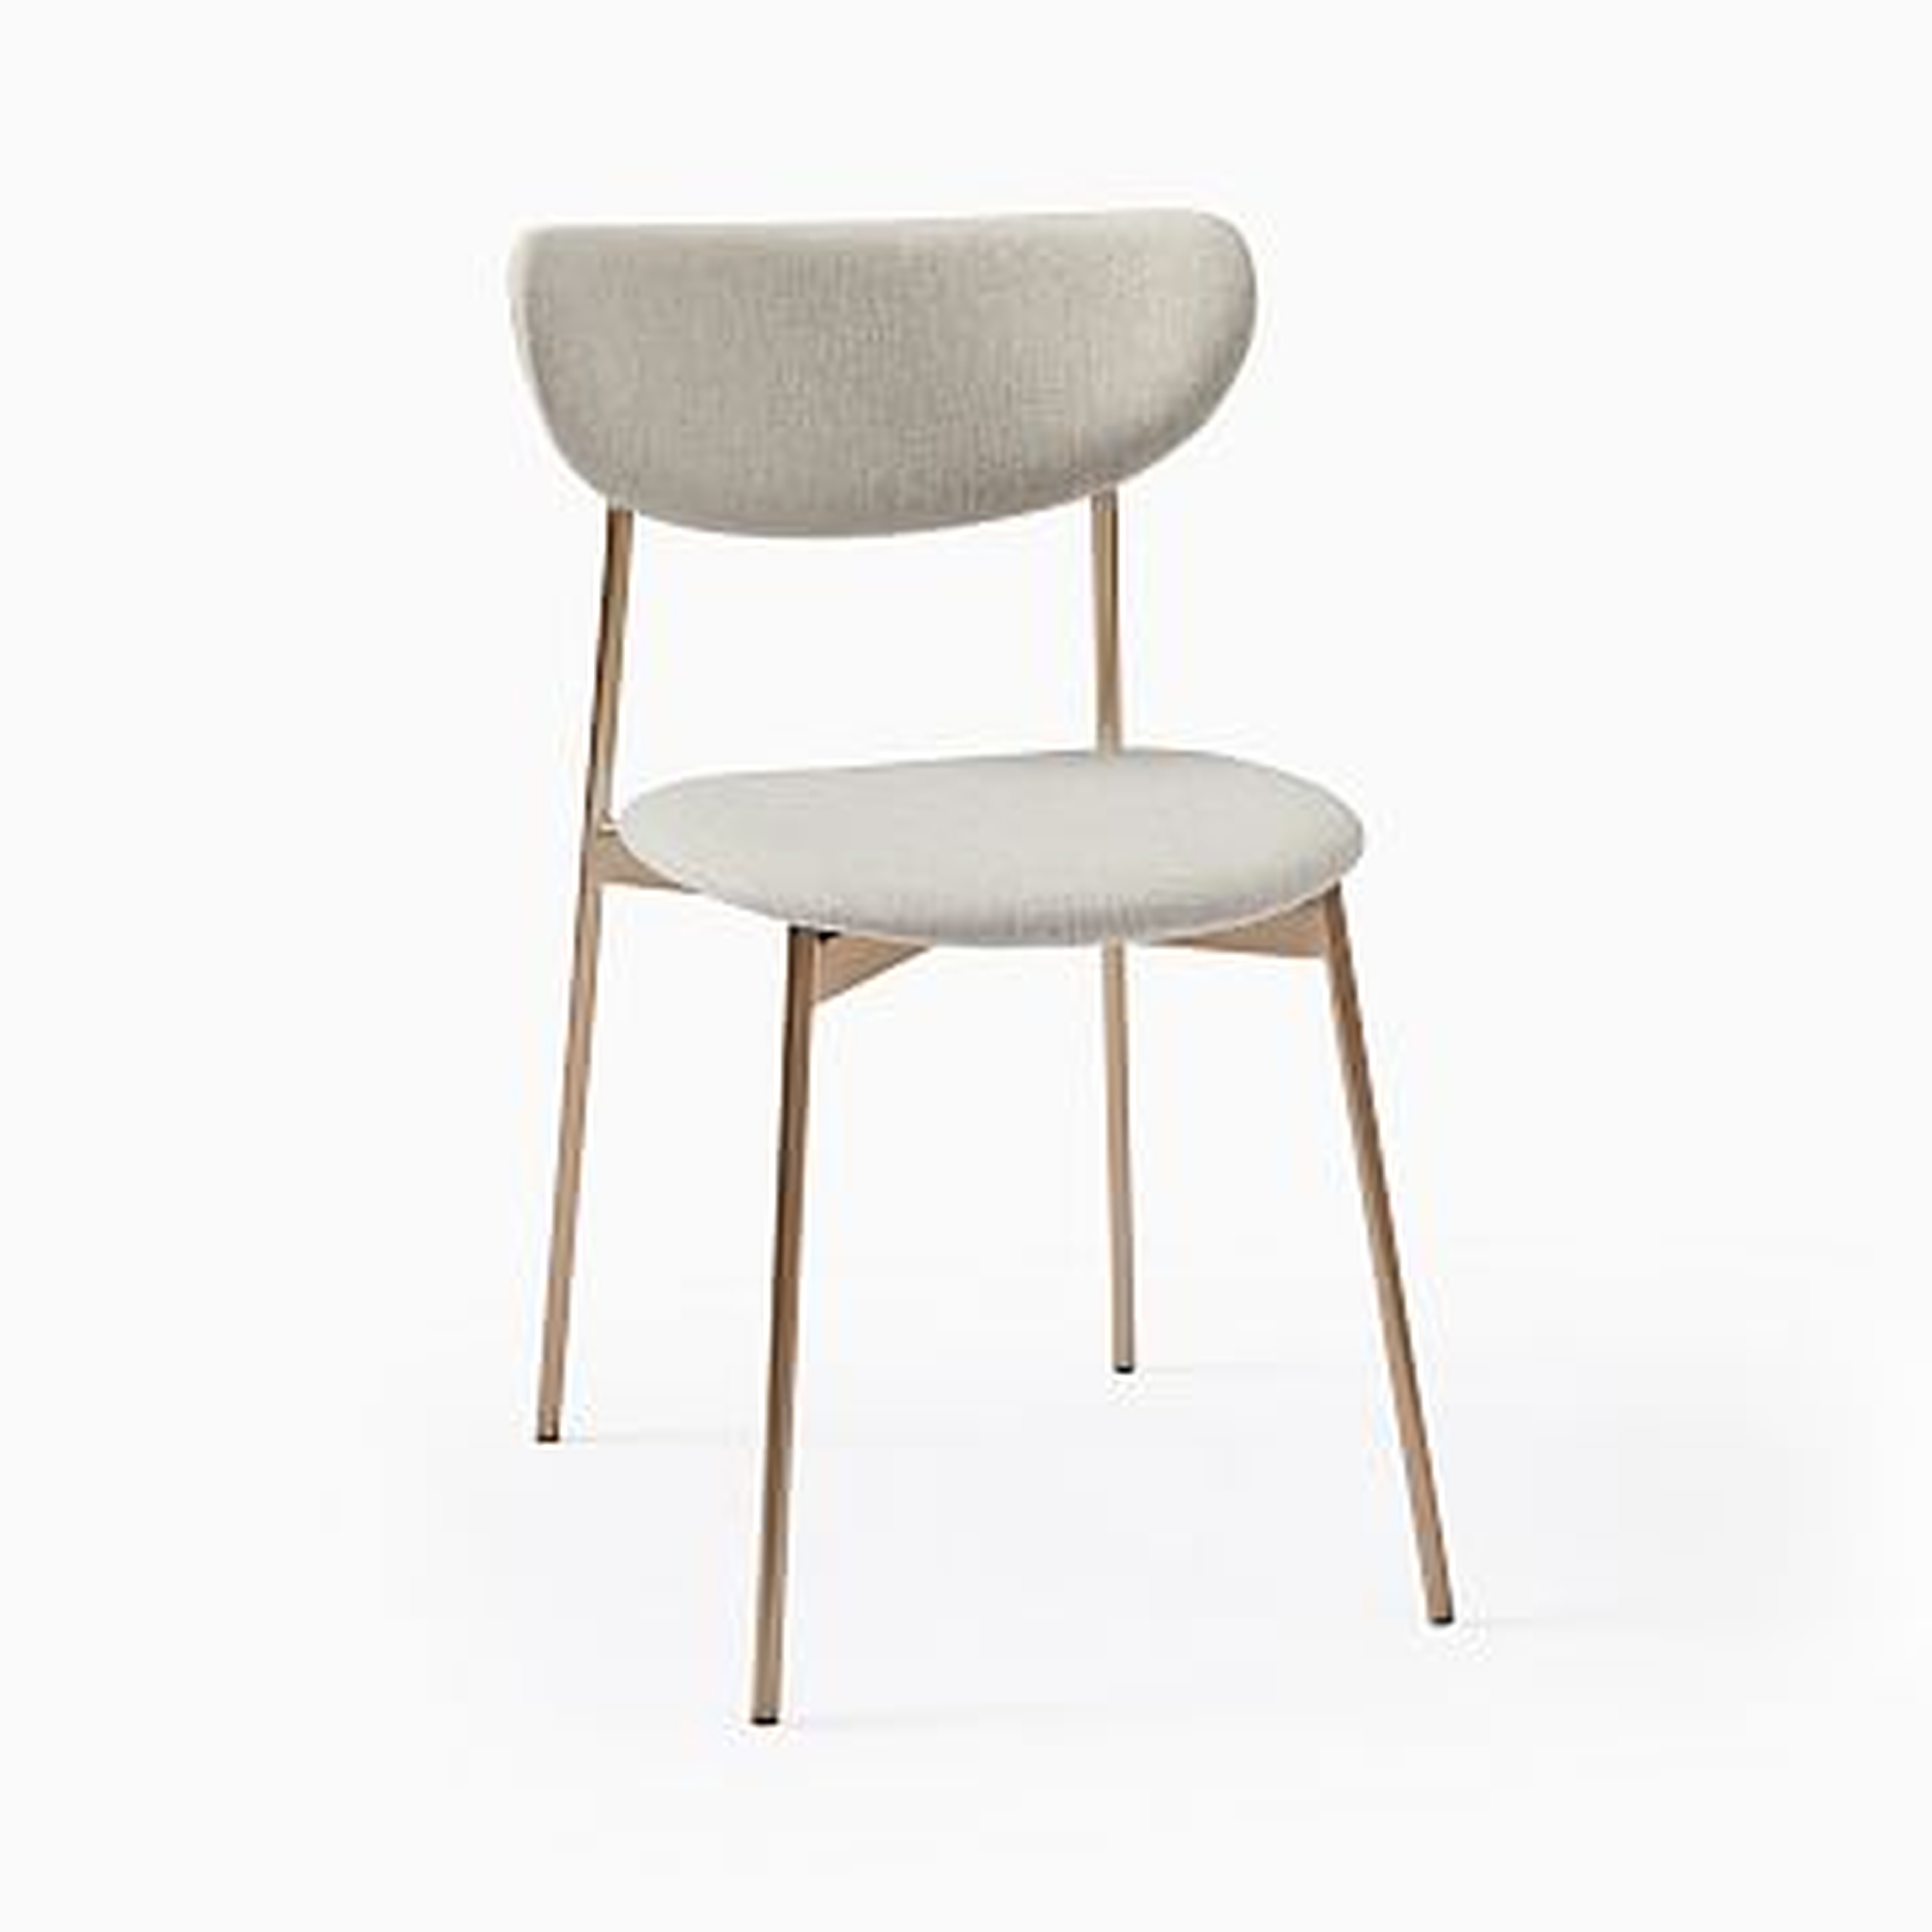 Modern Petal Fully Upholstered Dining Chair, Heathered Crosshatch, Natural, Light Bronze - West Elm